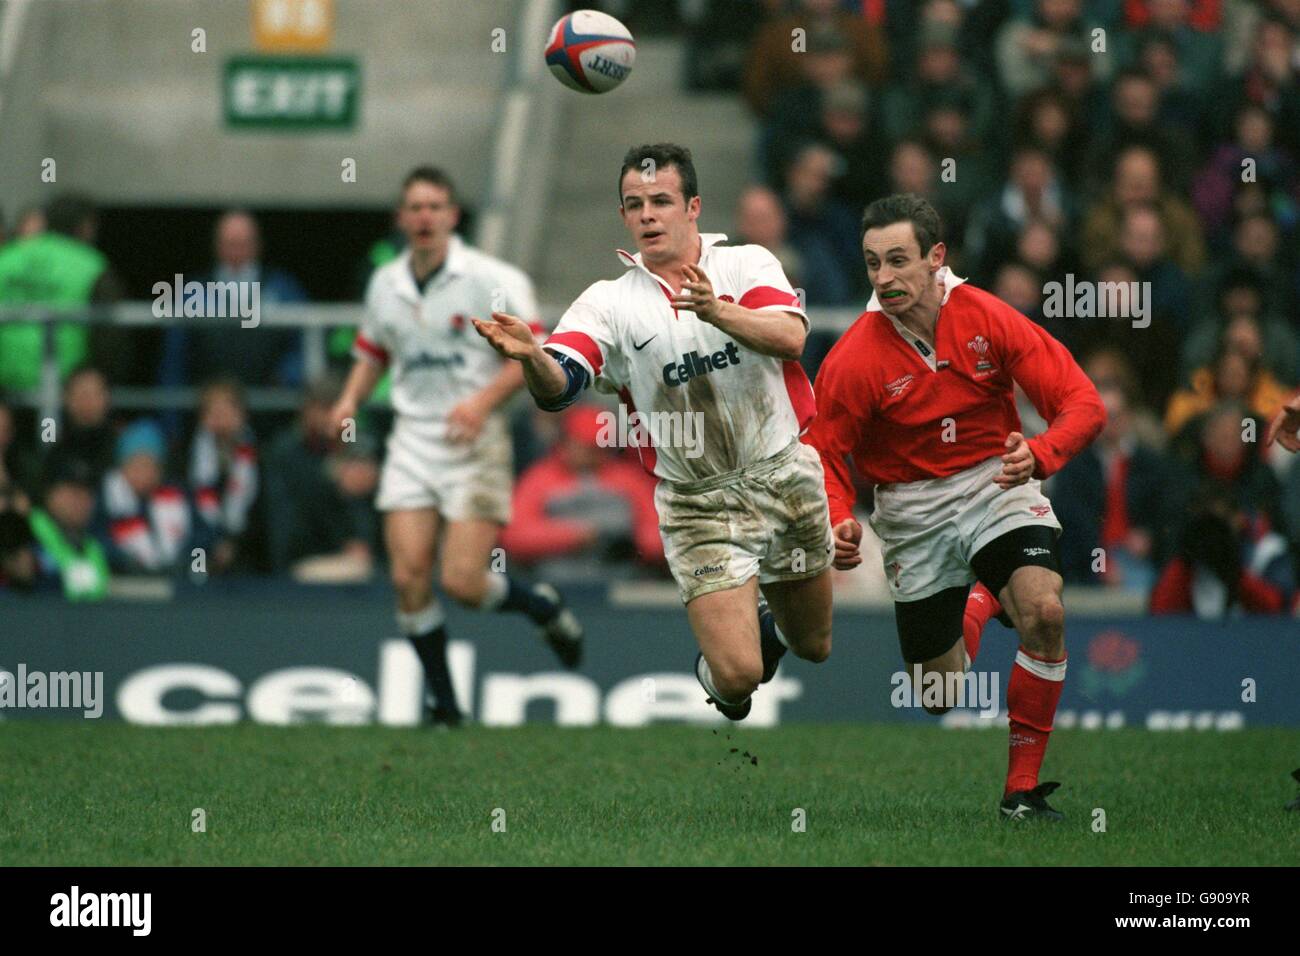 Rugby Union - Five Nations Championship - England gegen Wales. Austin Healey aus England und Wayne Proctor aus Wales (Cellnet) Stockfoto